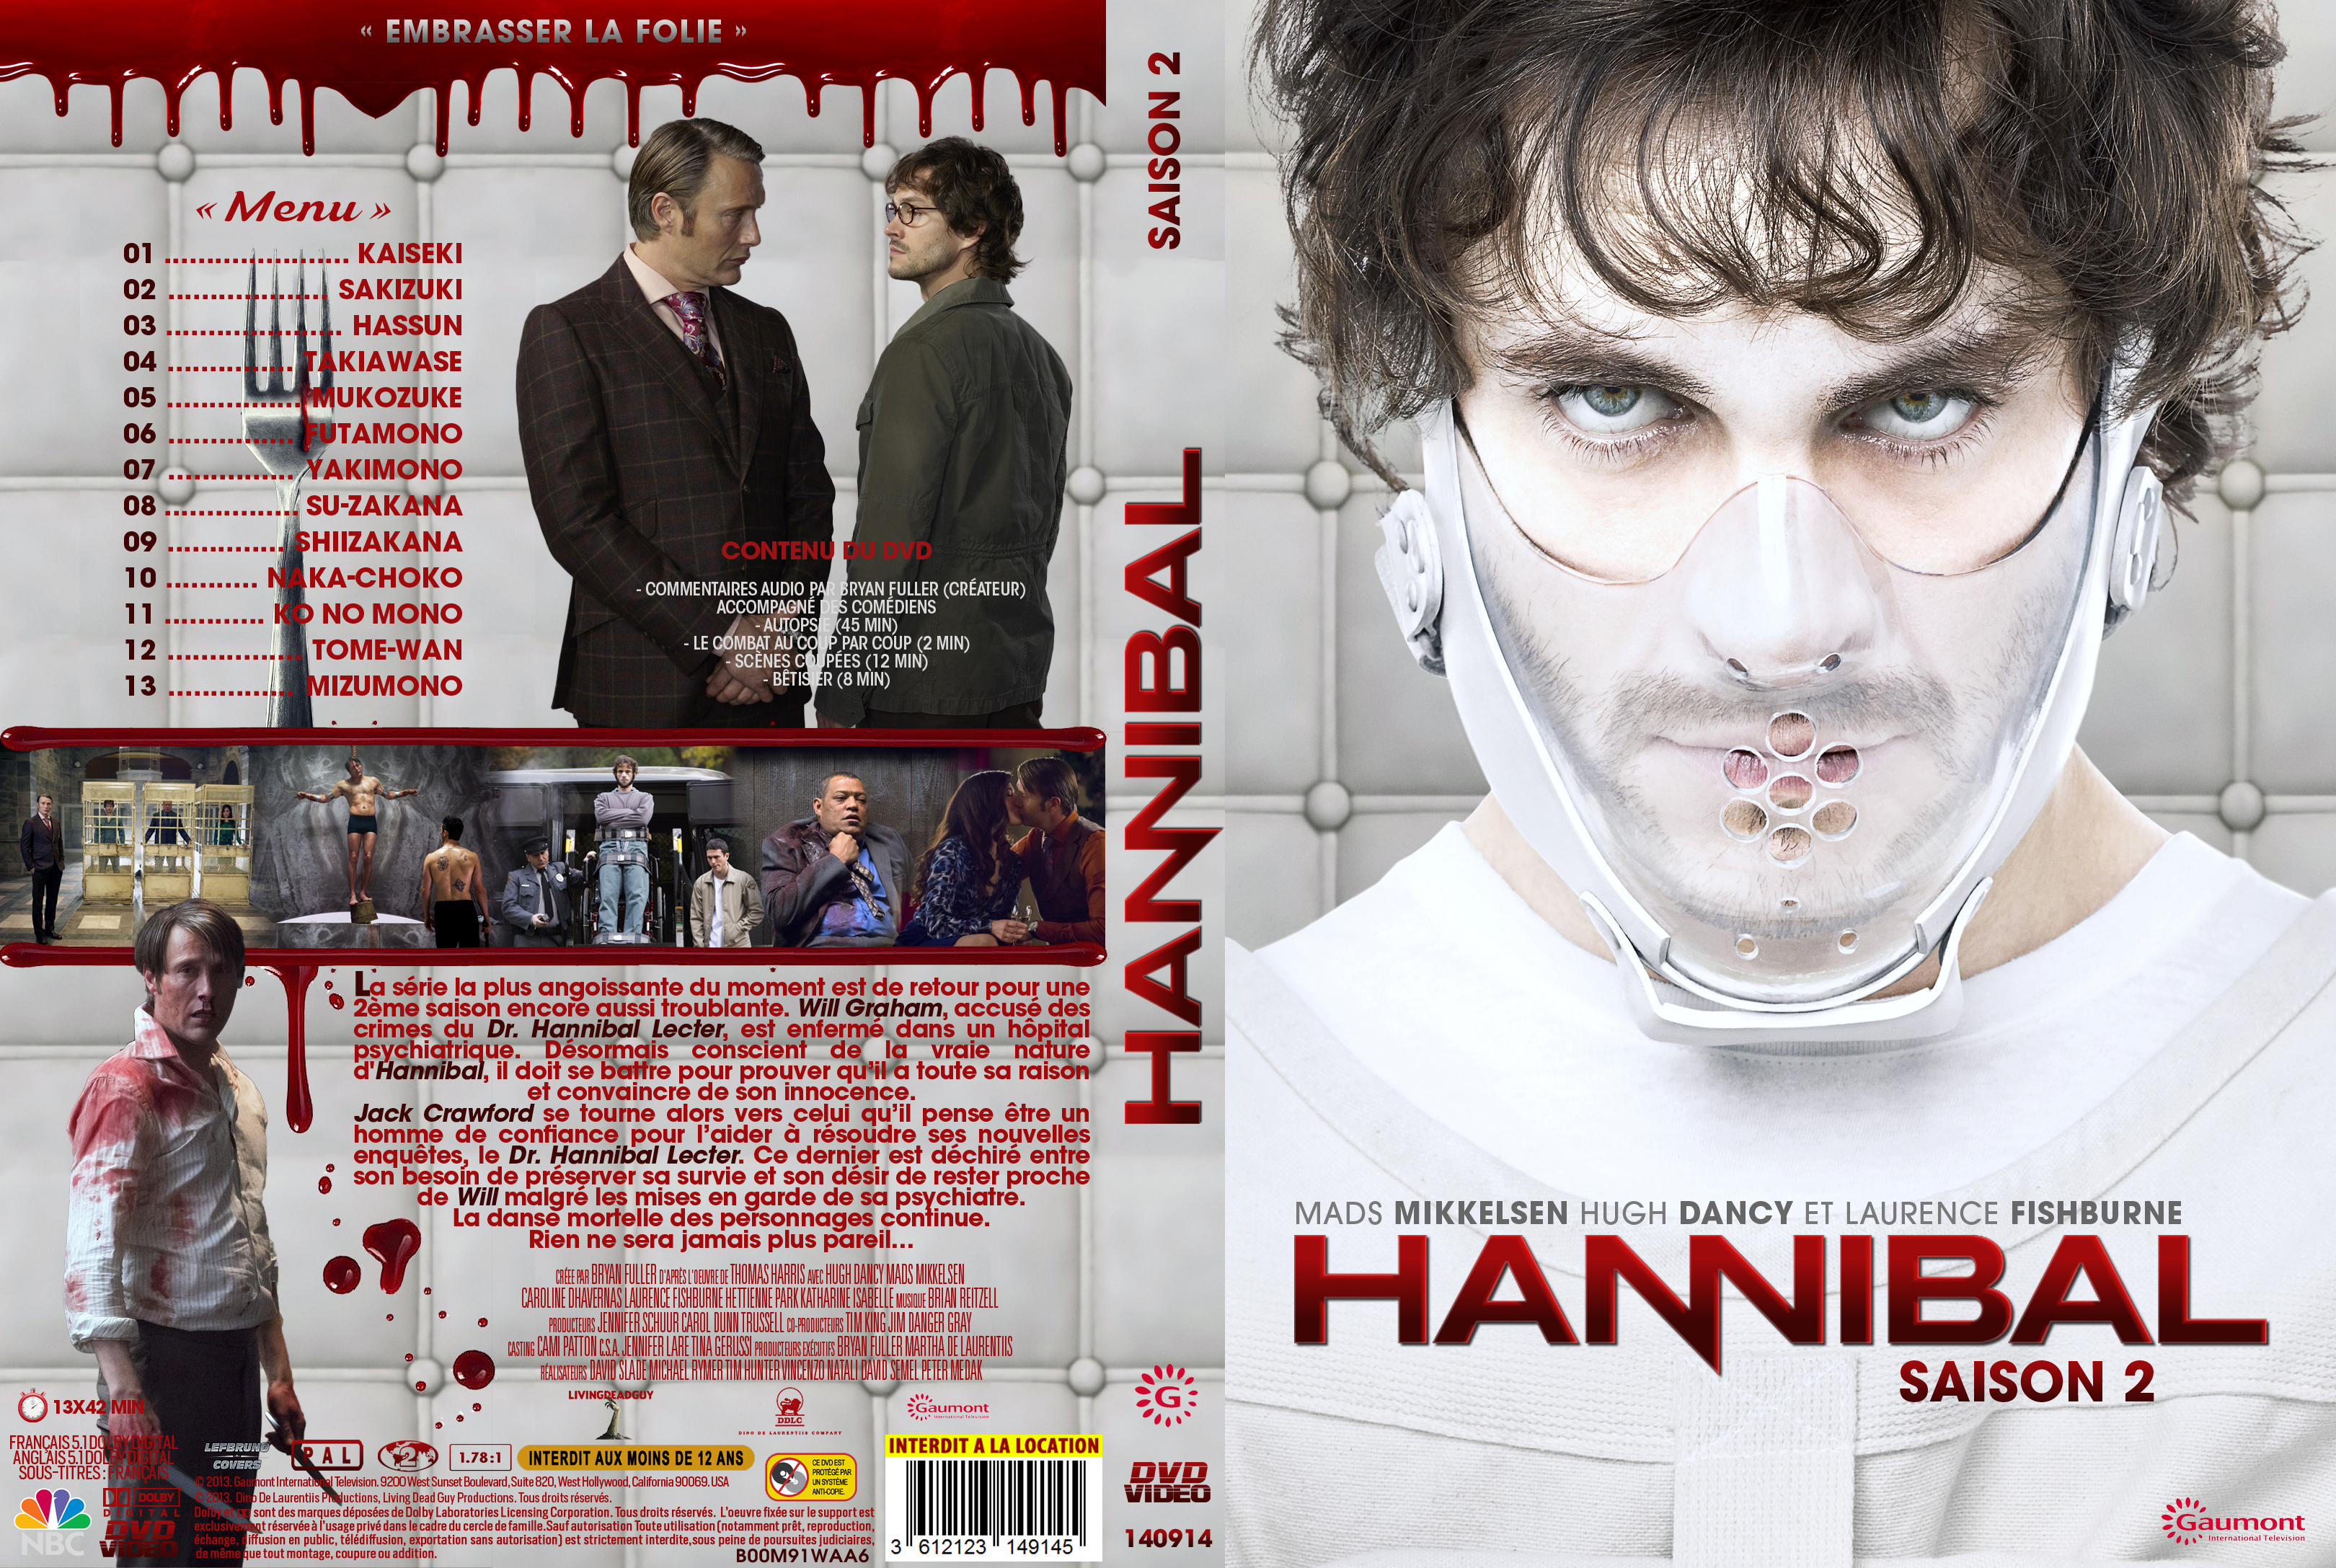 Jaquette DVD Hannibal Saison 2 custom